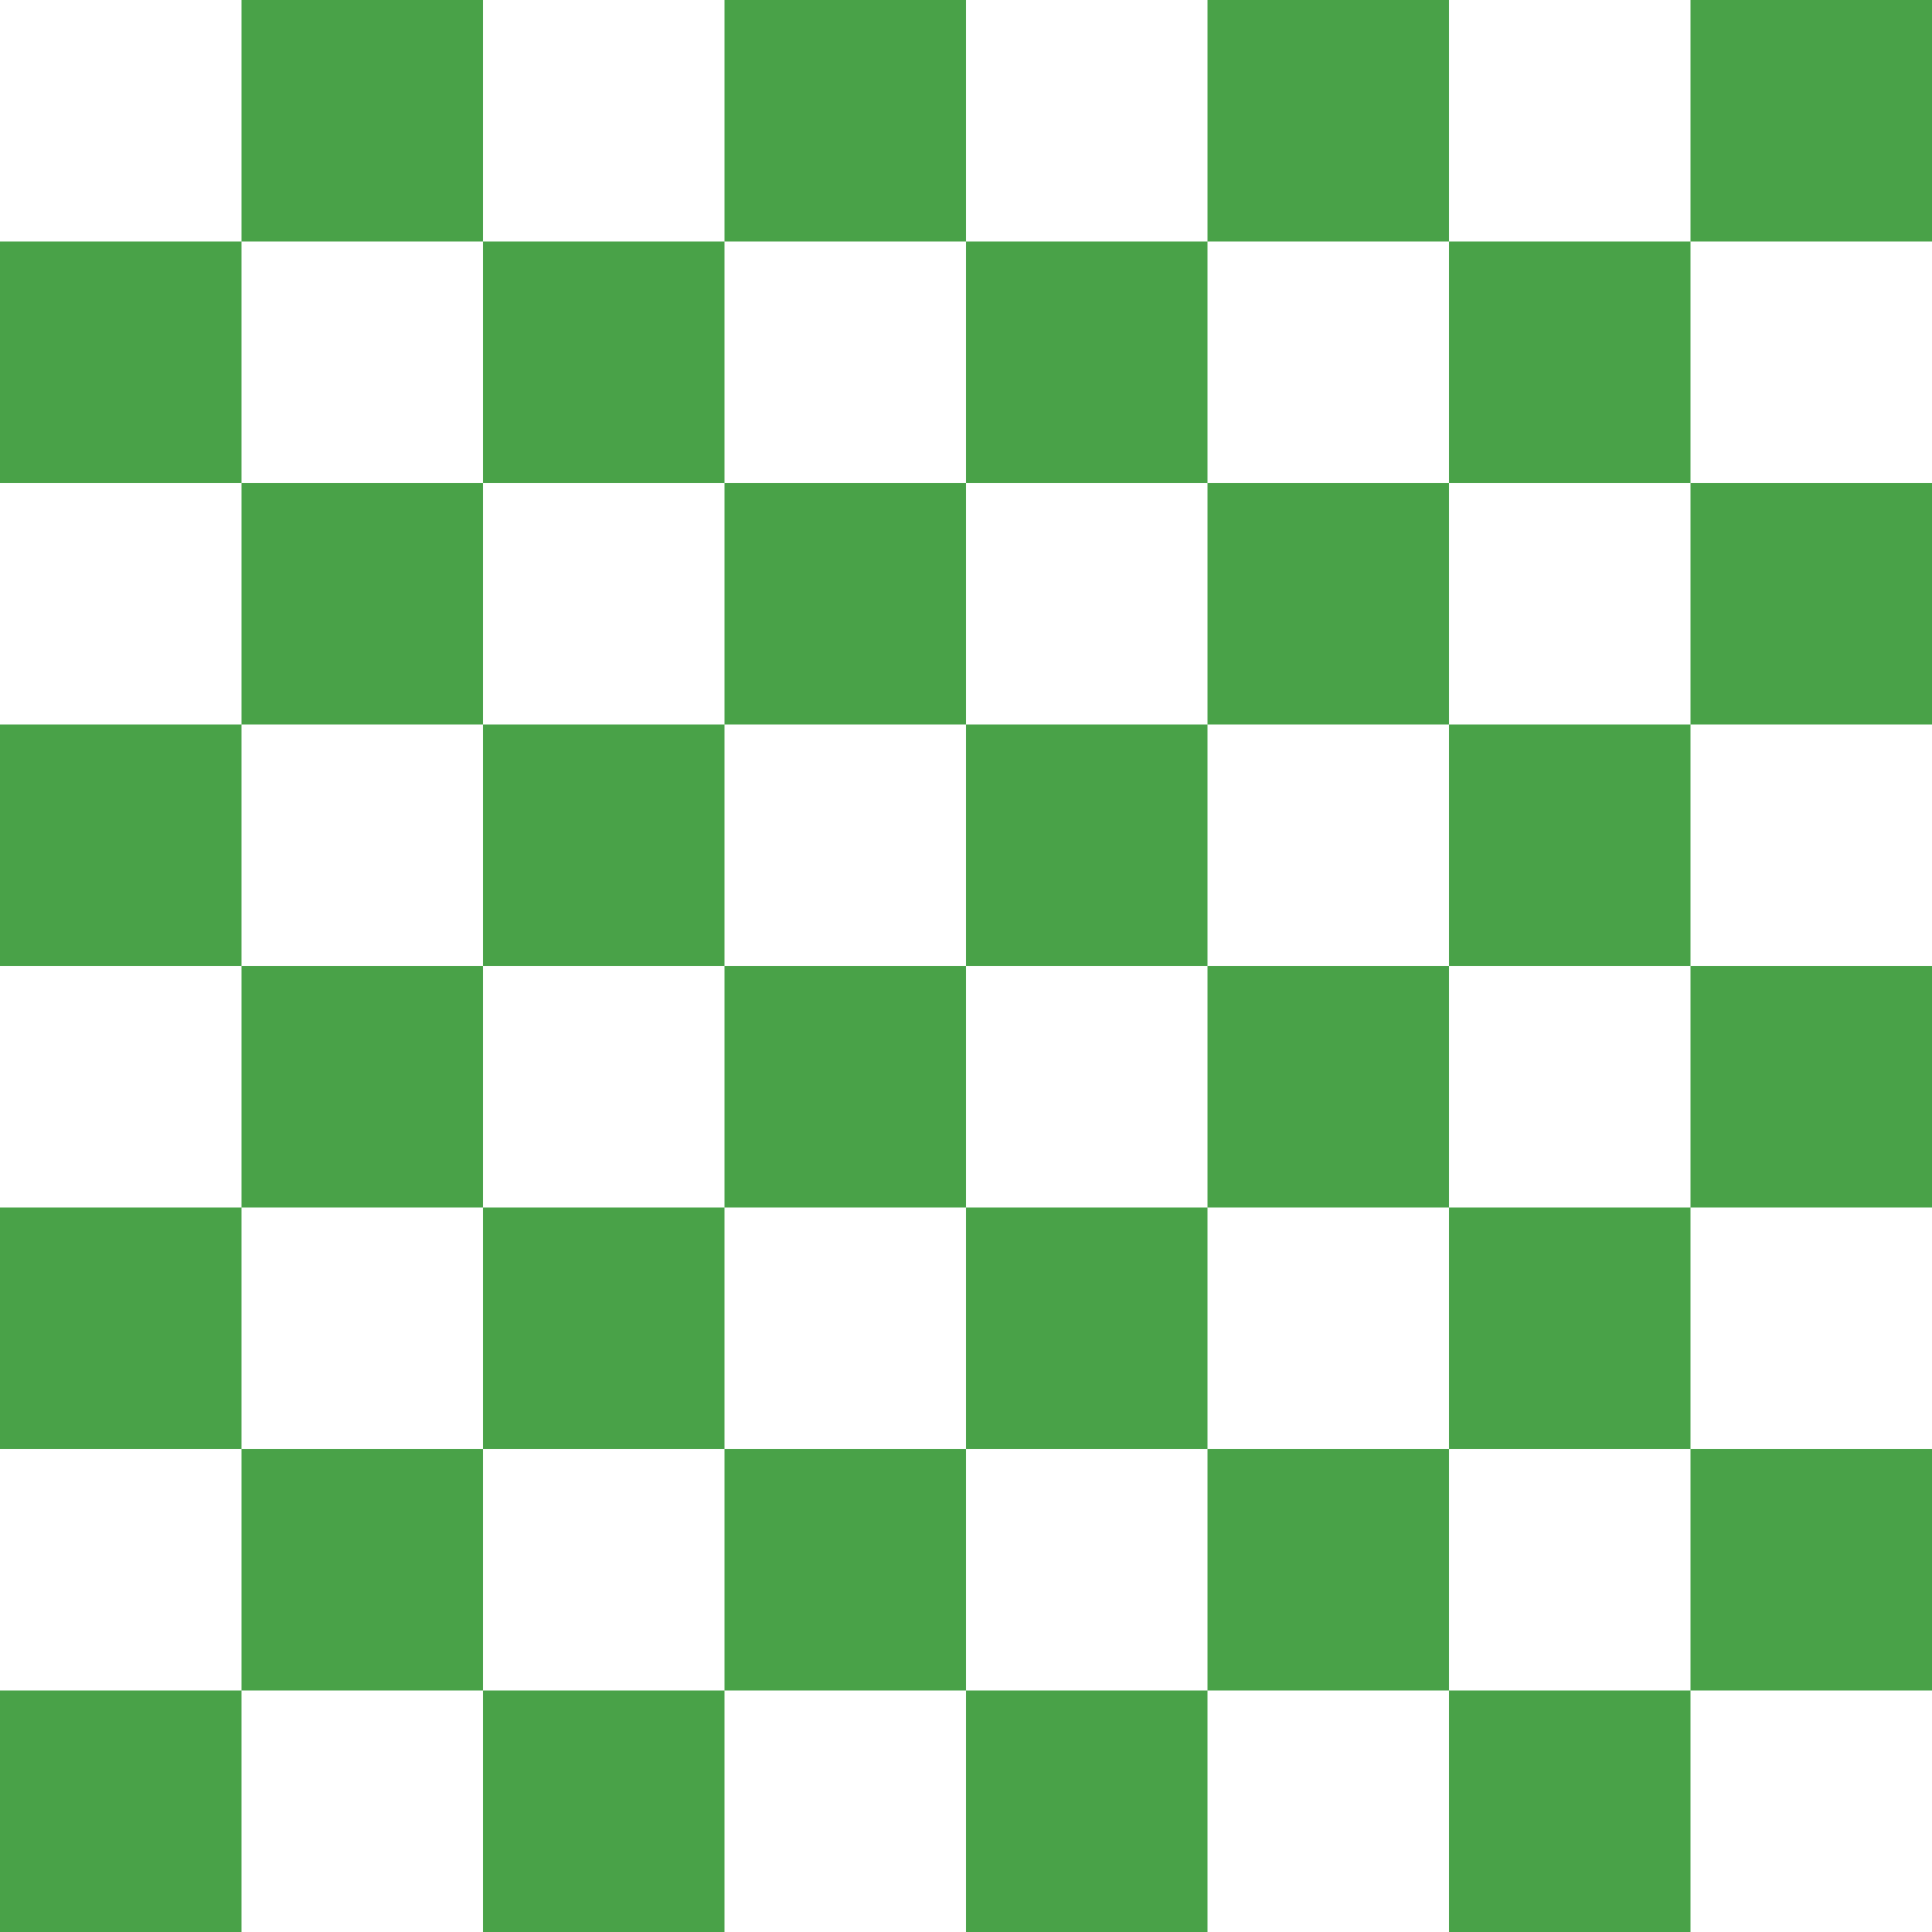 Filechessboard green squaressvg